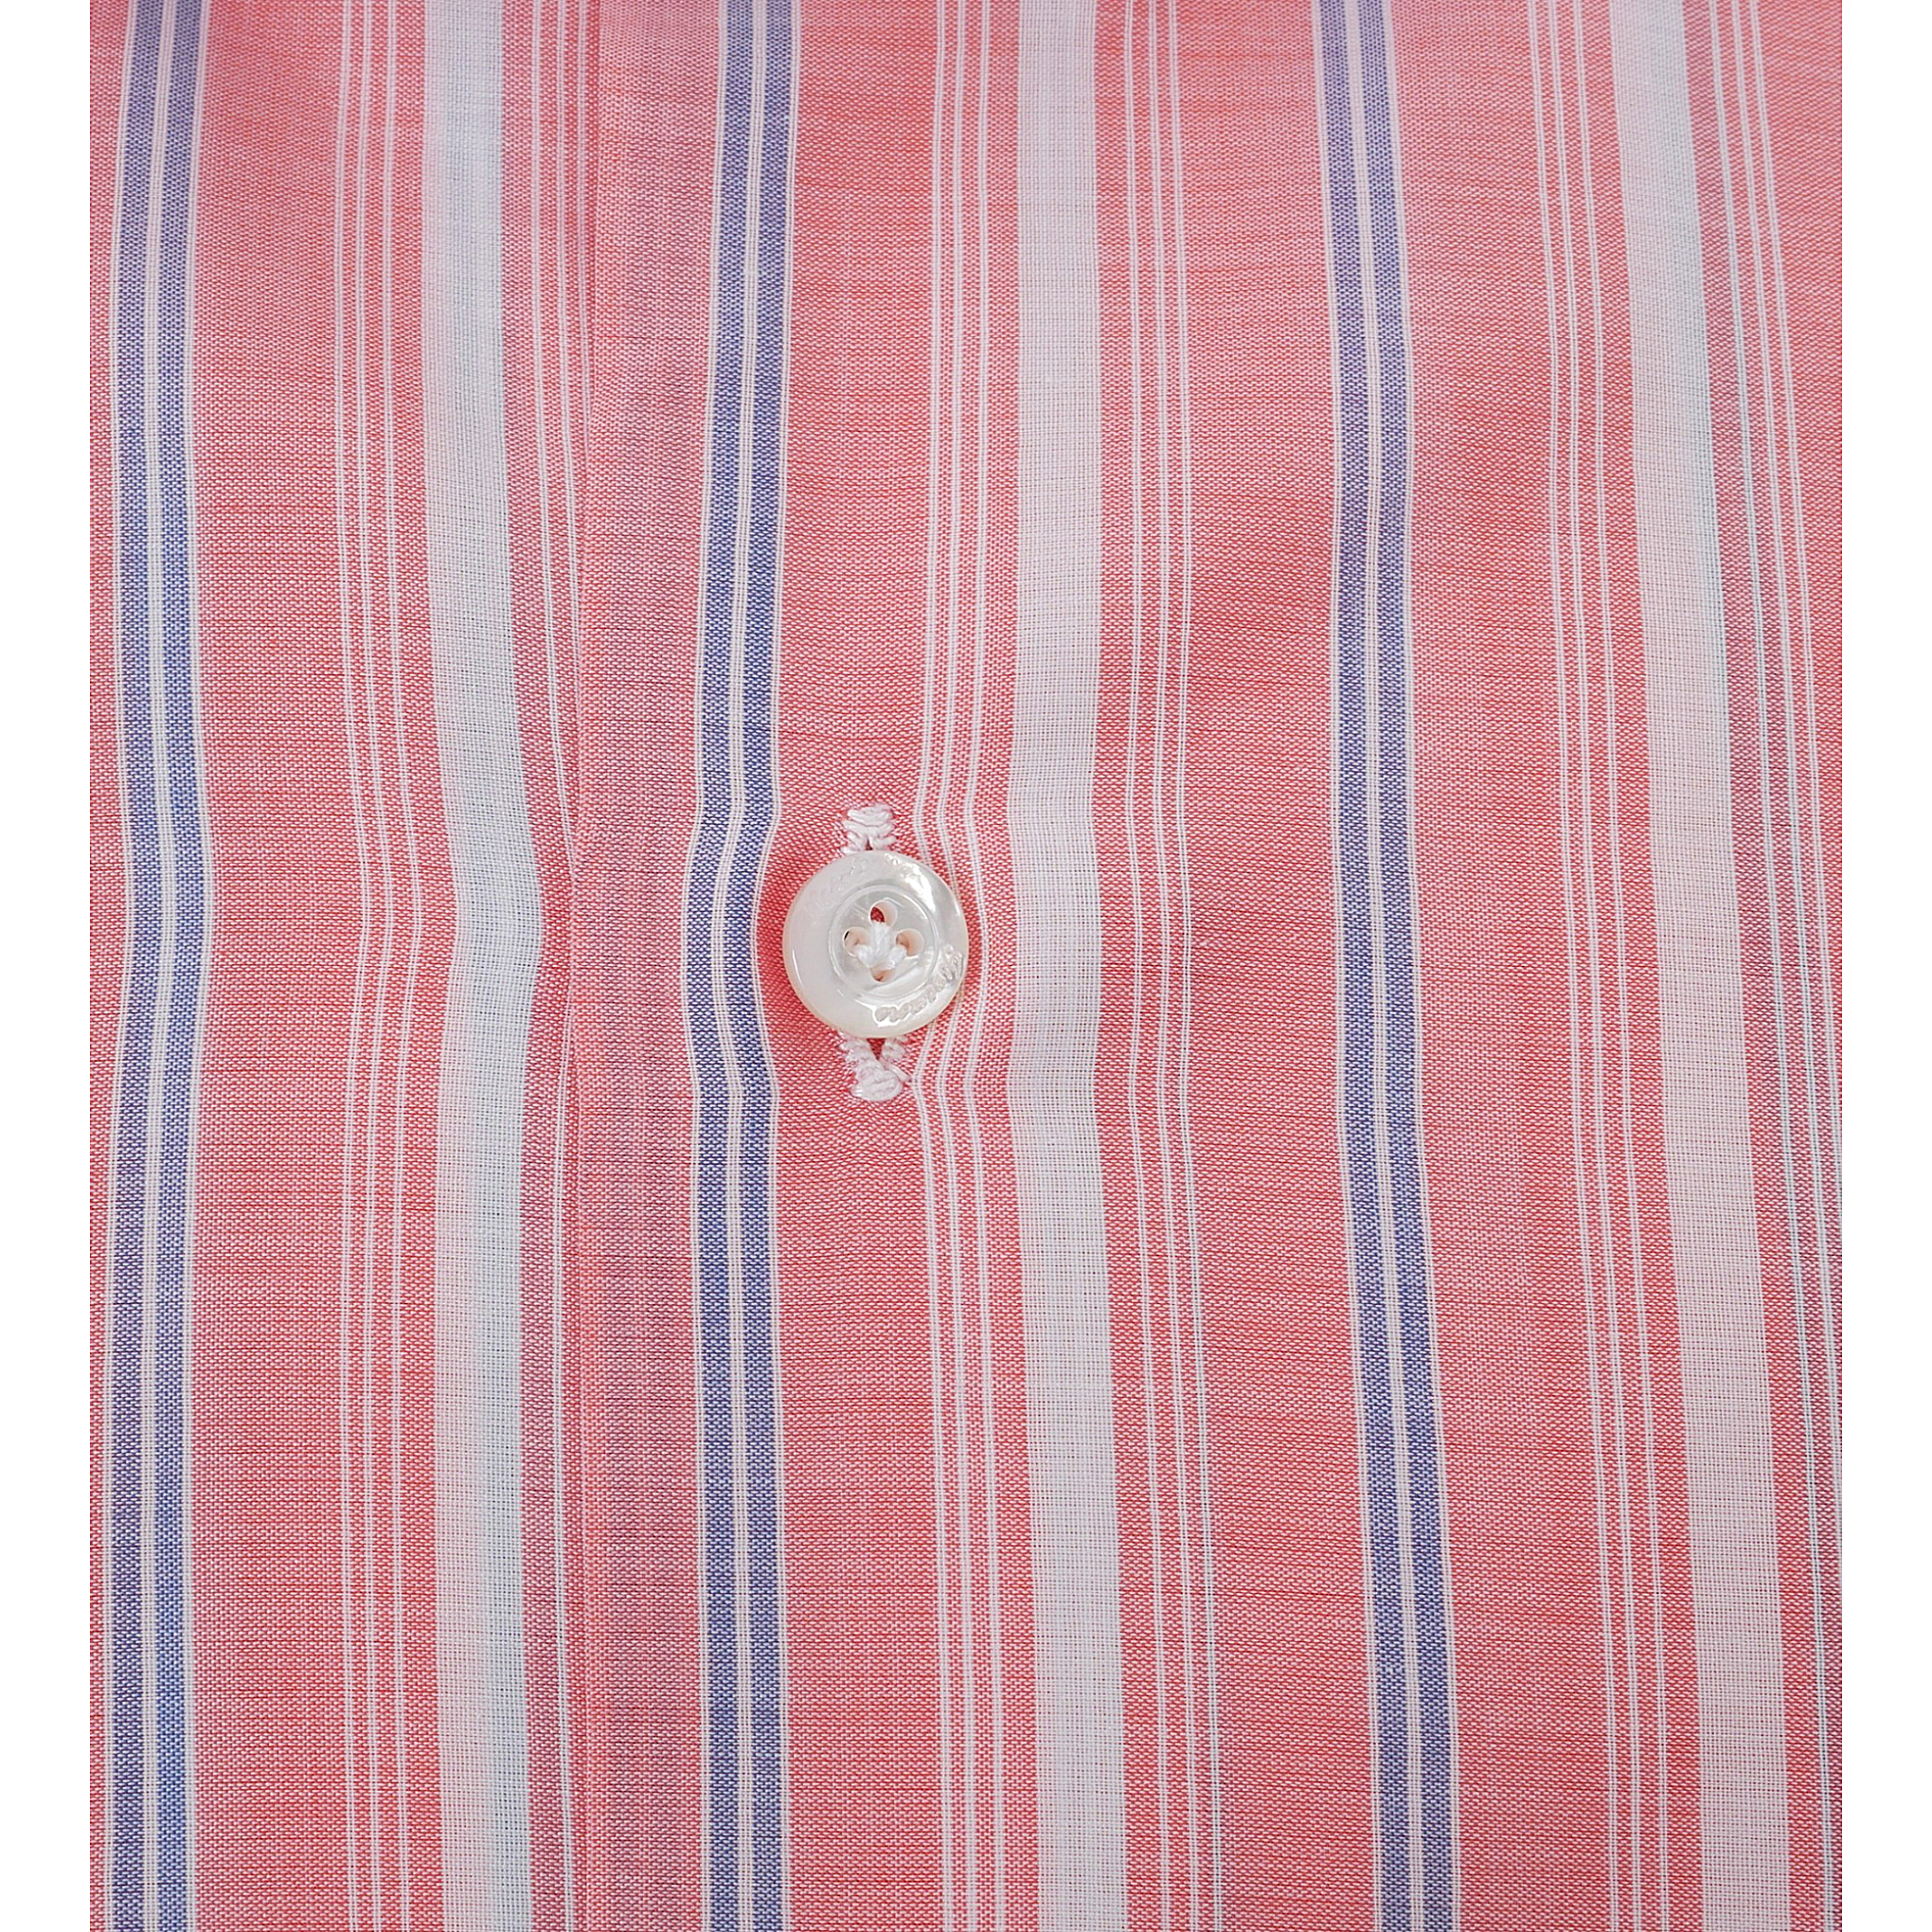 Regular shirt in pink multi-stripe cotton Napoli Finamore 1925